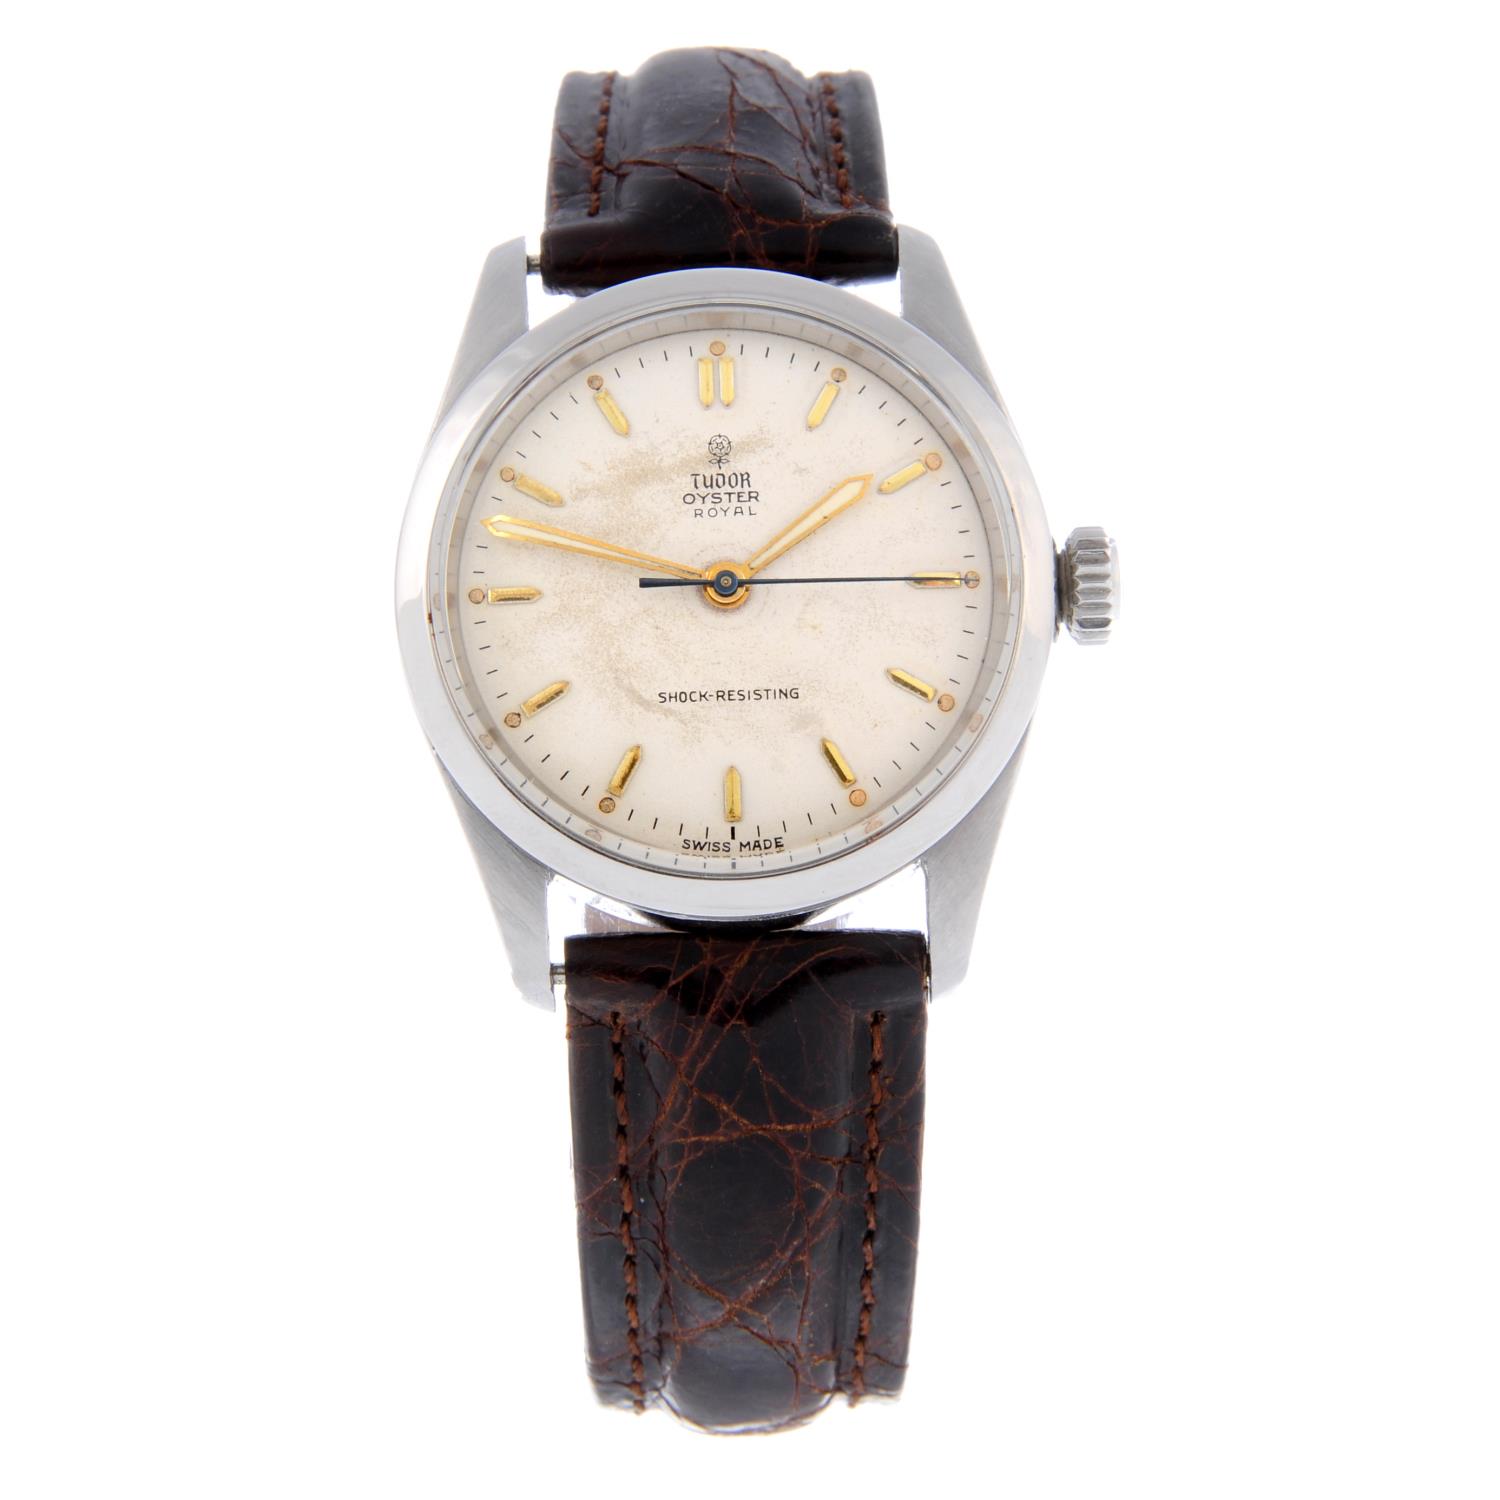 TUDOR - a gentleman's Oyster Royal wrist watch.